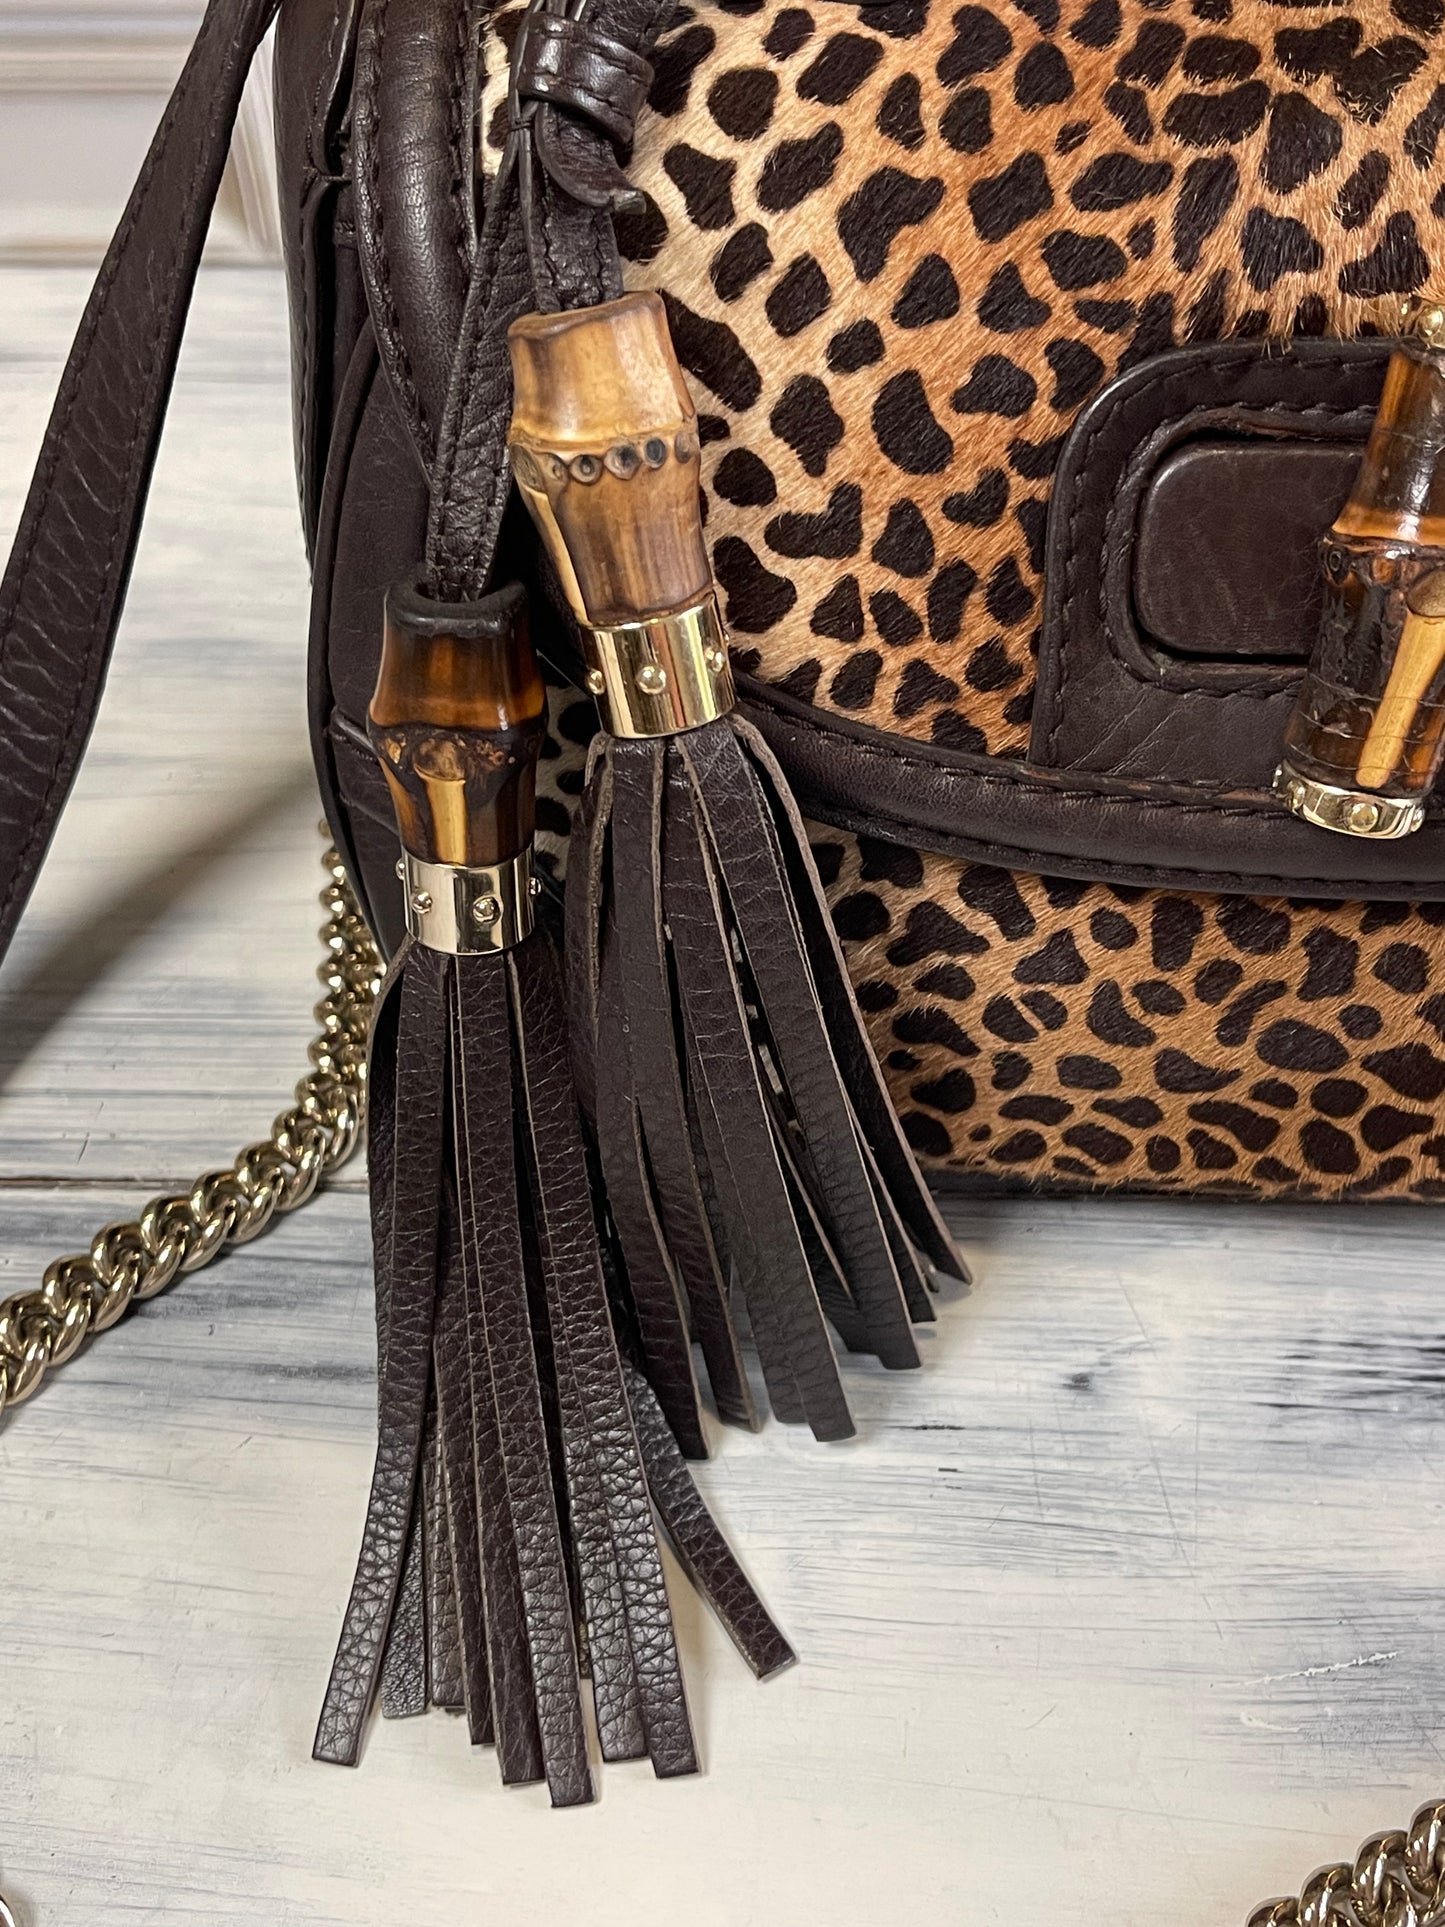 Gucci New Convertible Bamboo Top Handle Bag Leopard Print Pony Hair